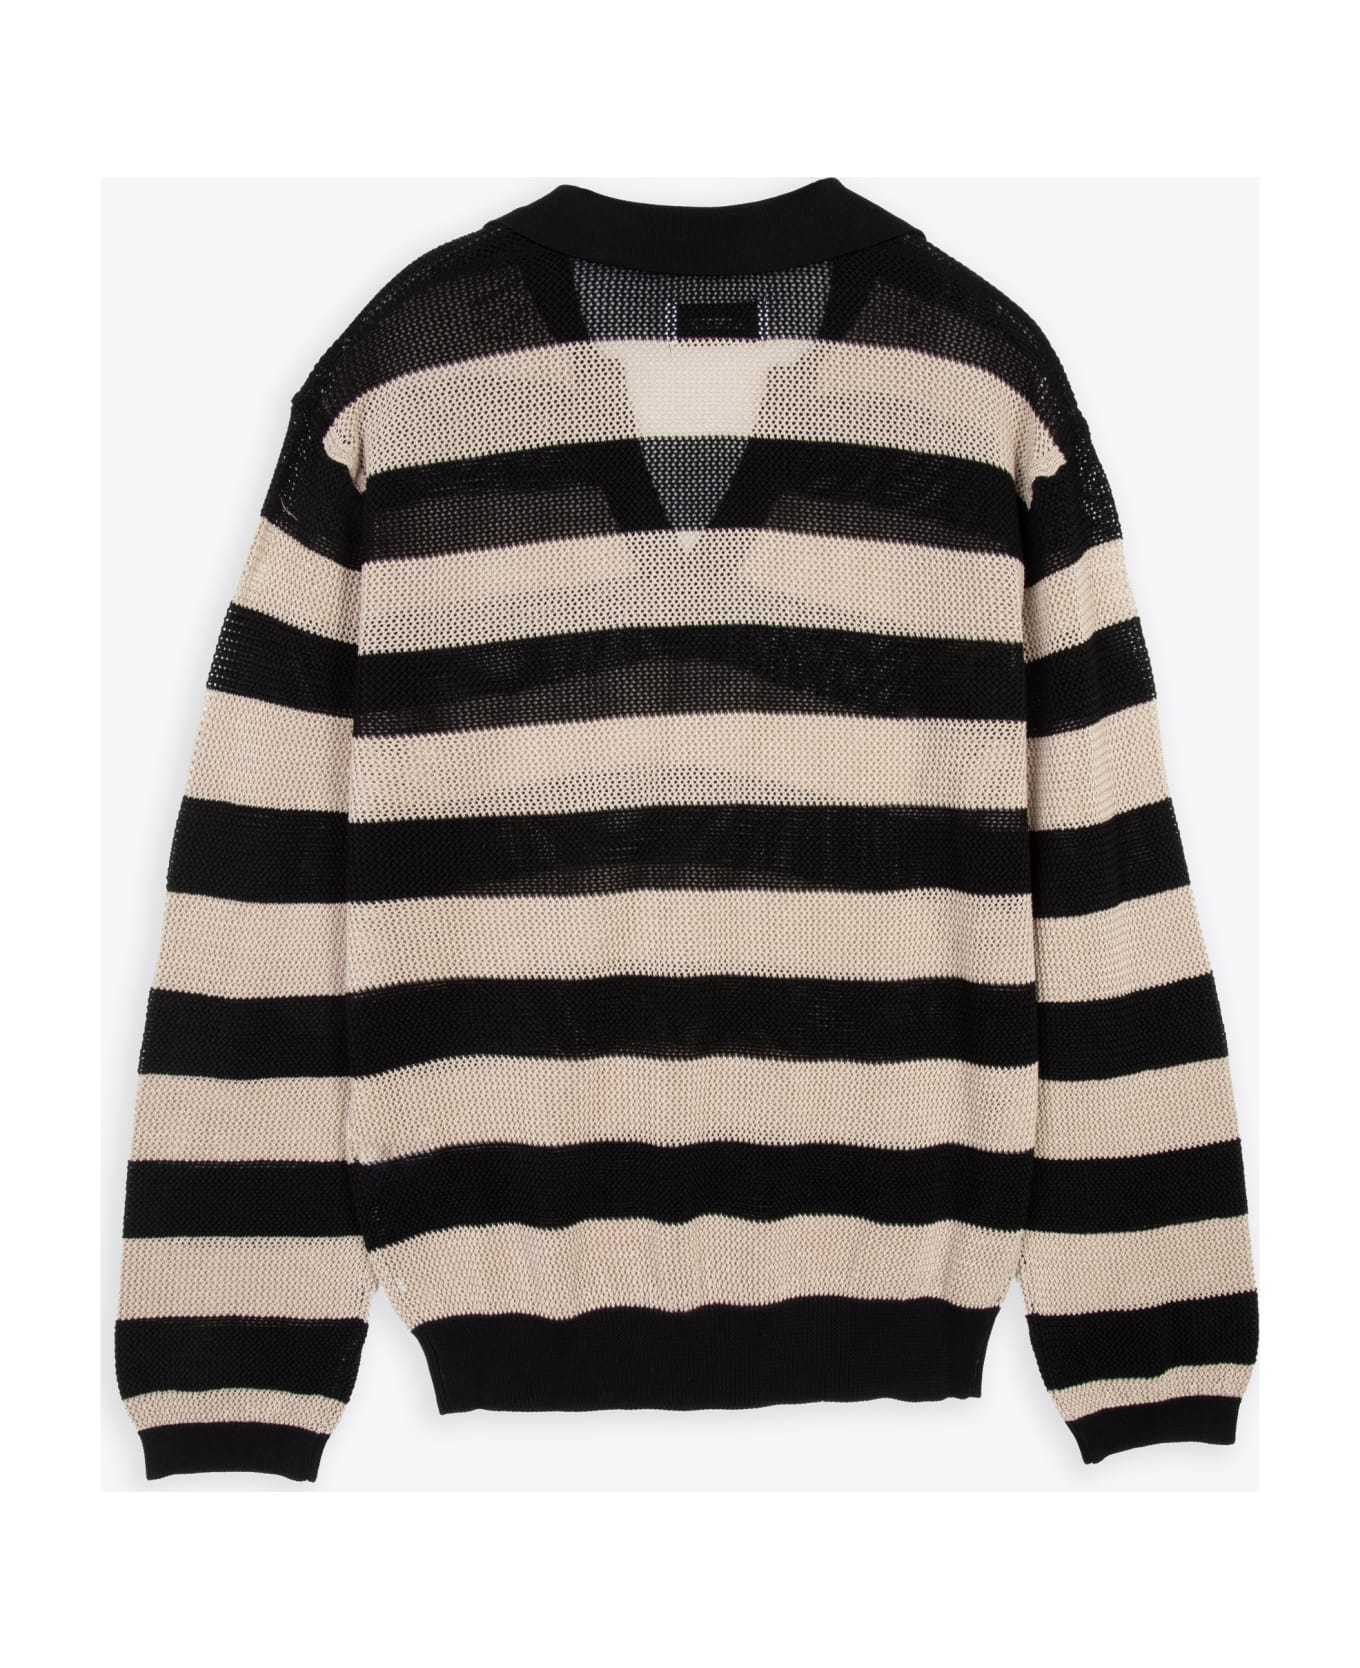 Laneus Mesh Polo Shirt Long Sleeves Man Beige and black striped mesh knitted polo shirt - Mesh polo shirt - Nero/beige